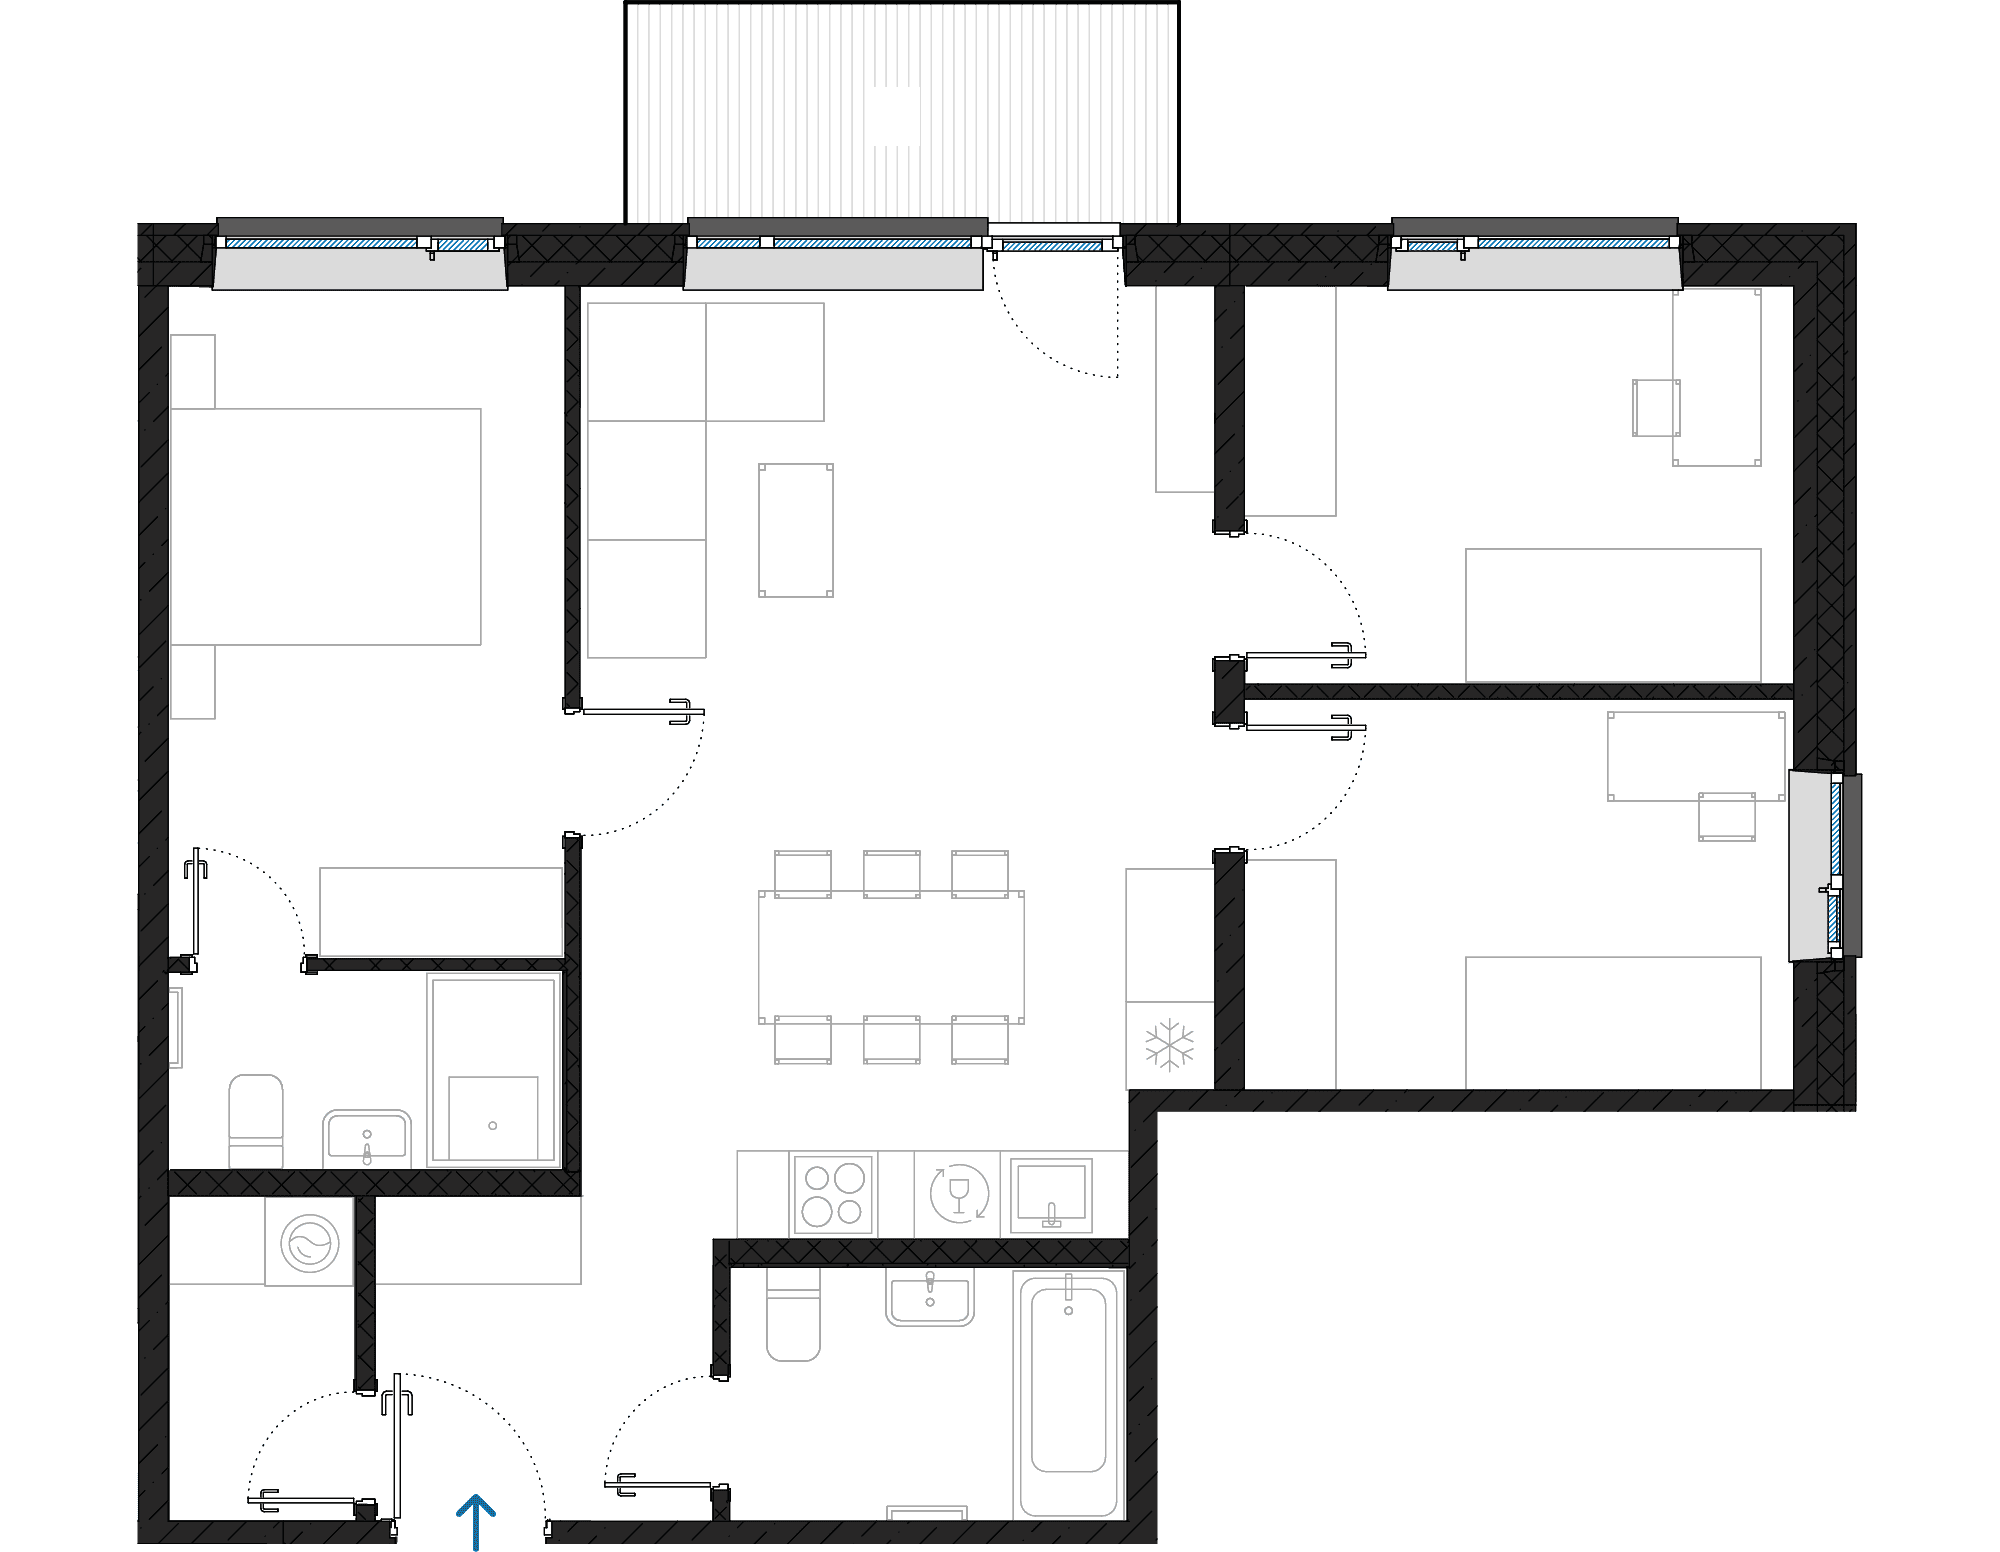 4A floorplan